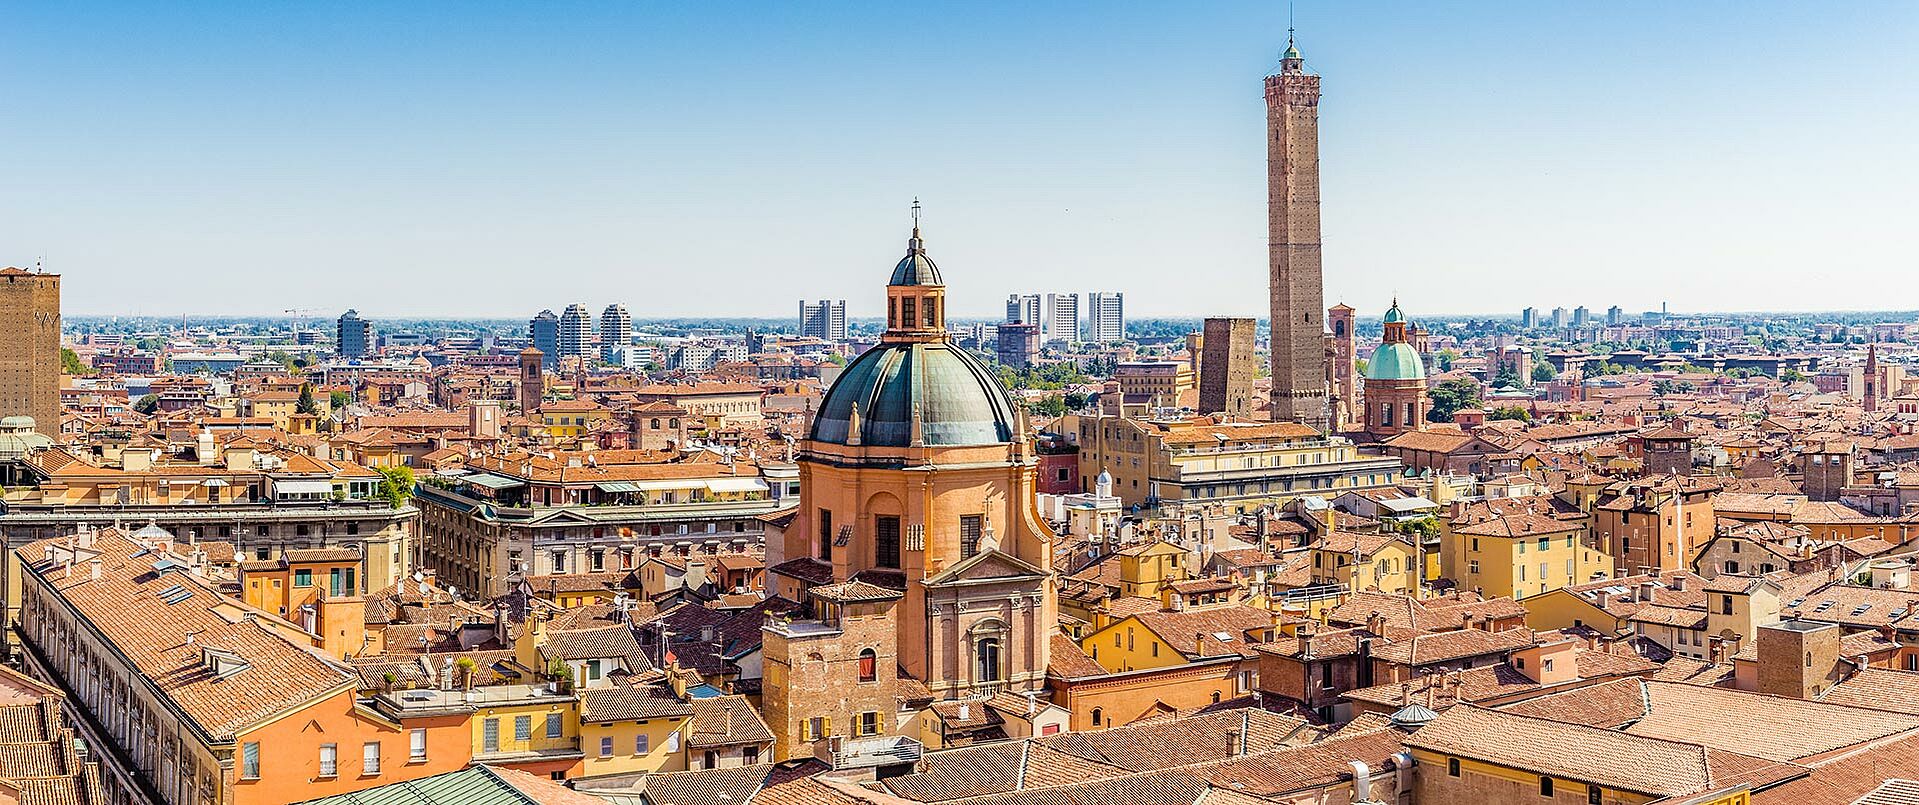 The skyline of the city Bologna.